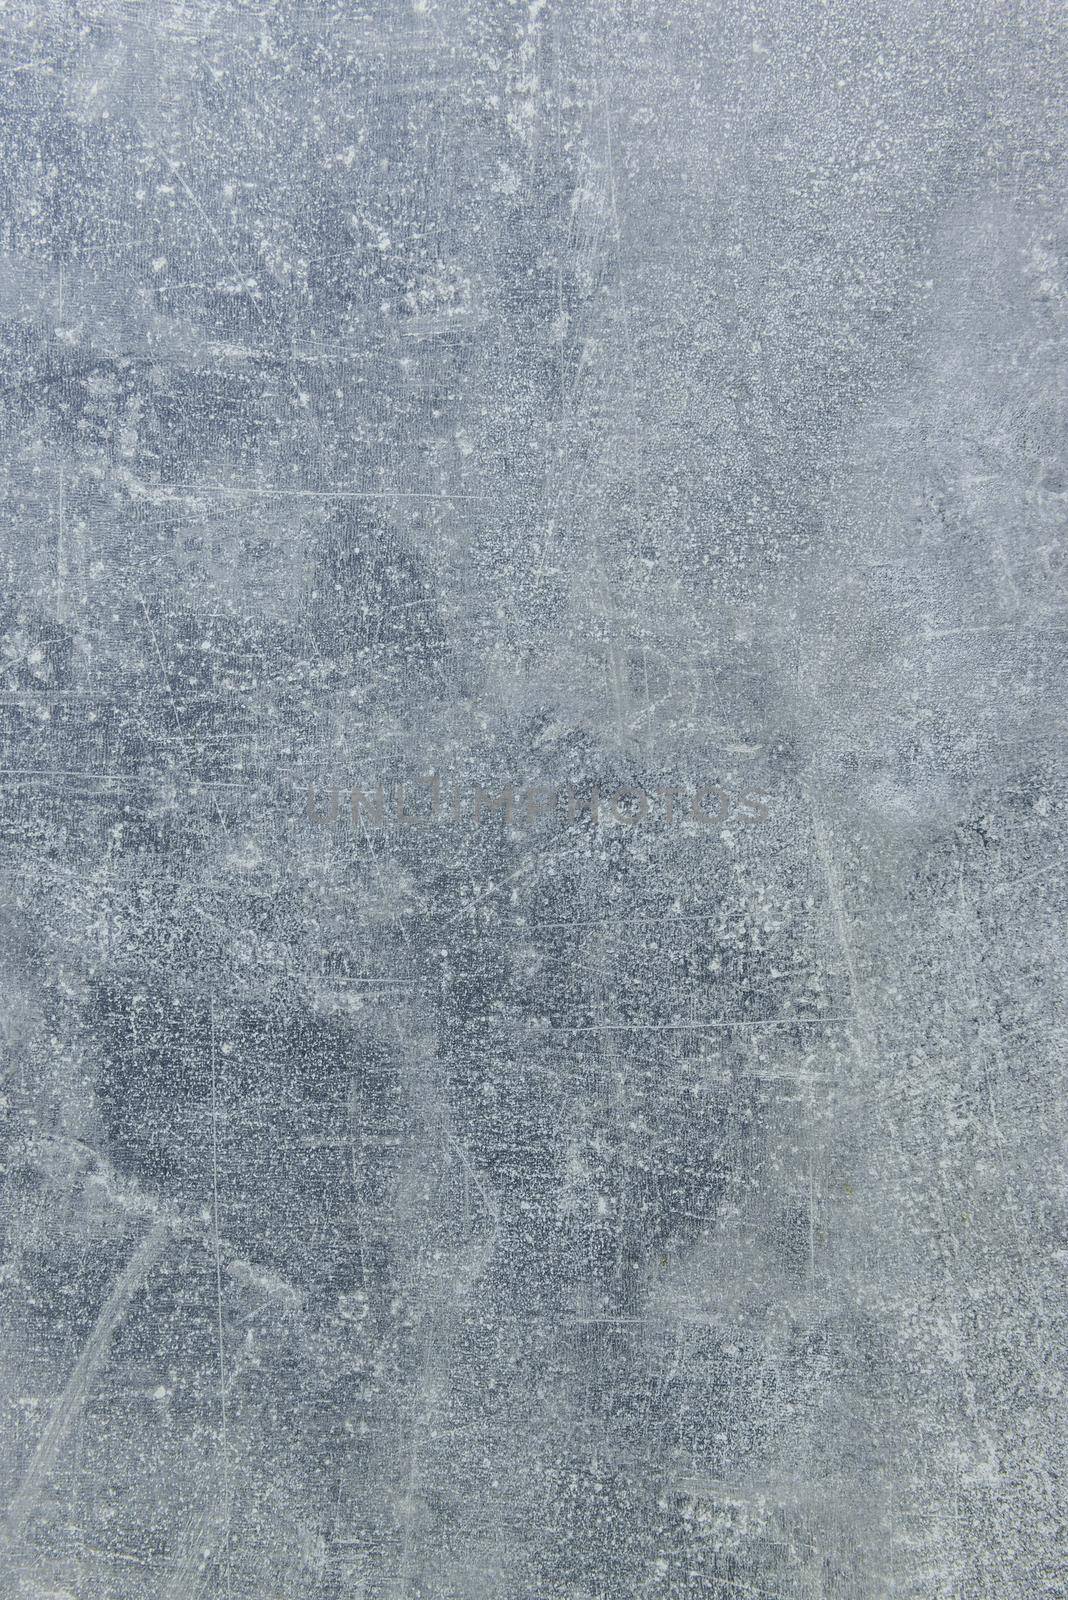 Gray-blue marble or cracked concrete background as an abstract background or marble or concrete texture by karpovkottt